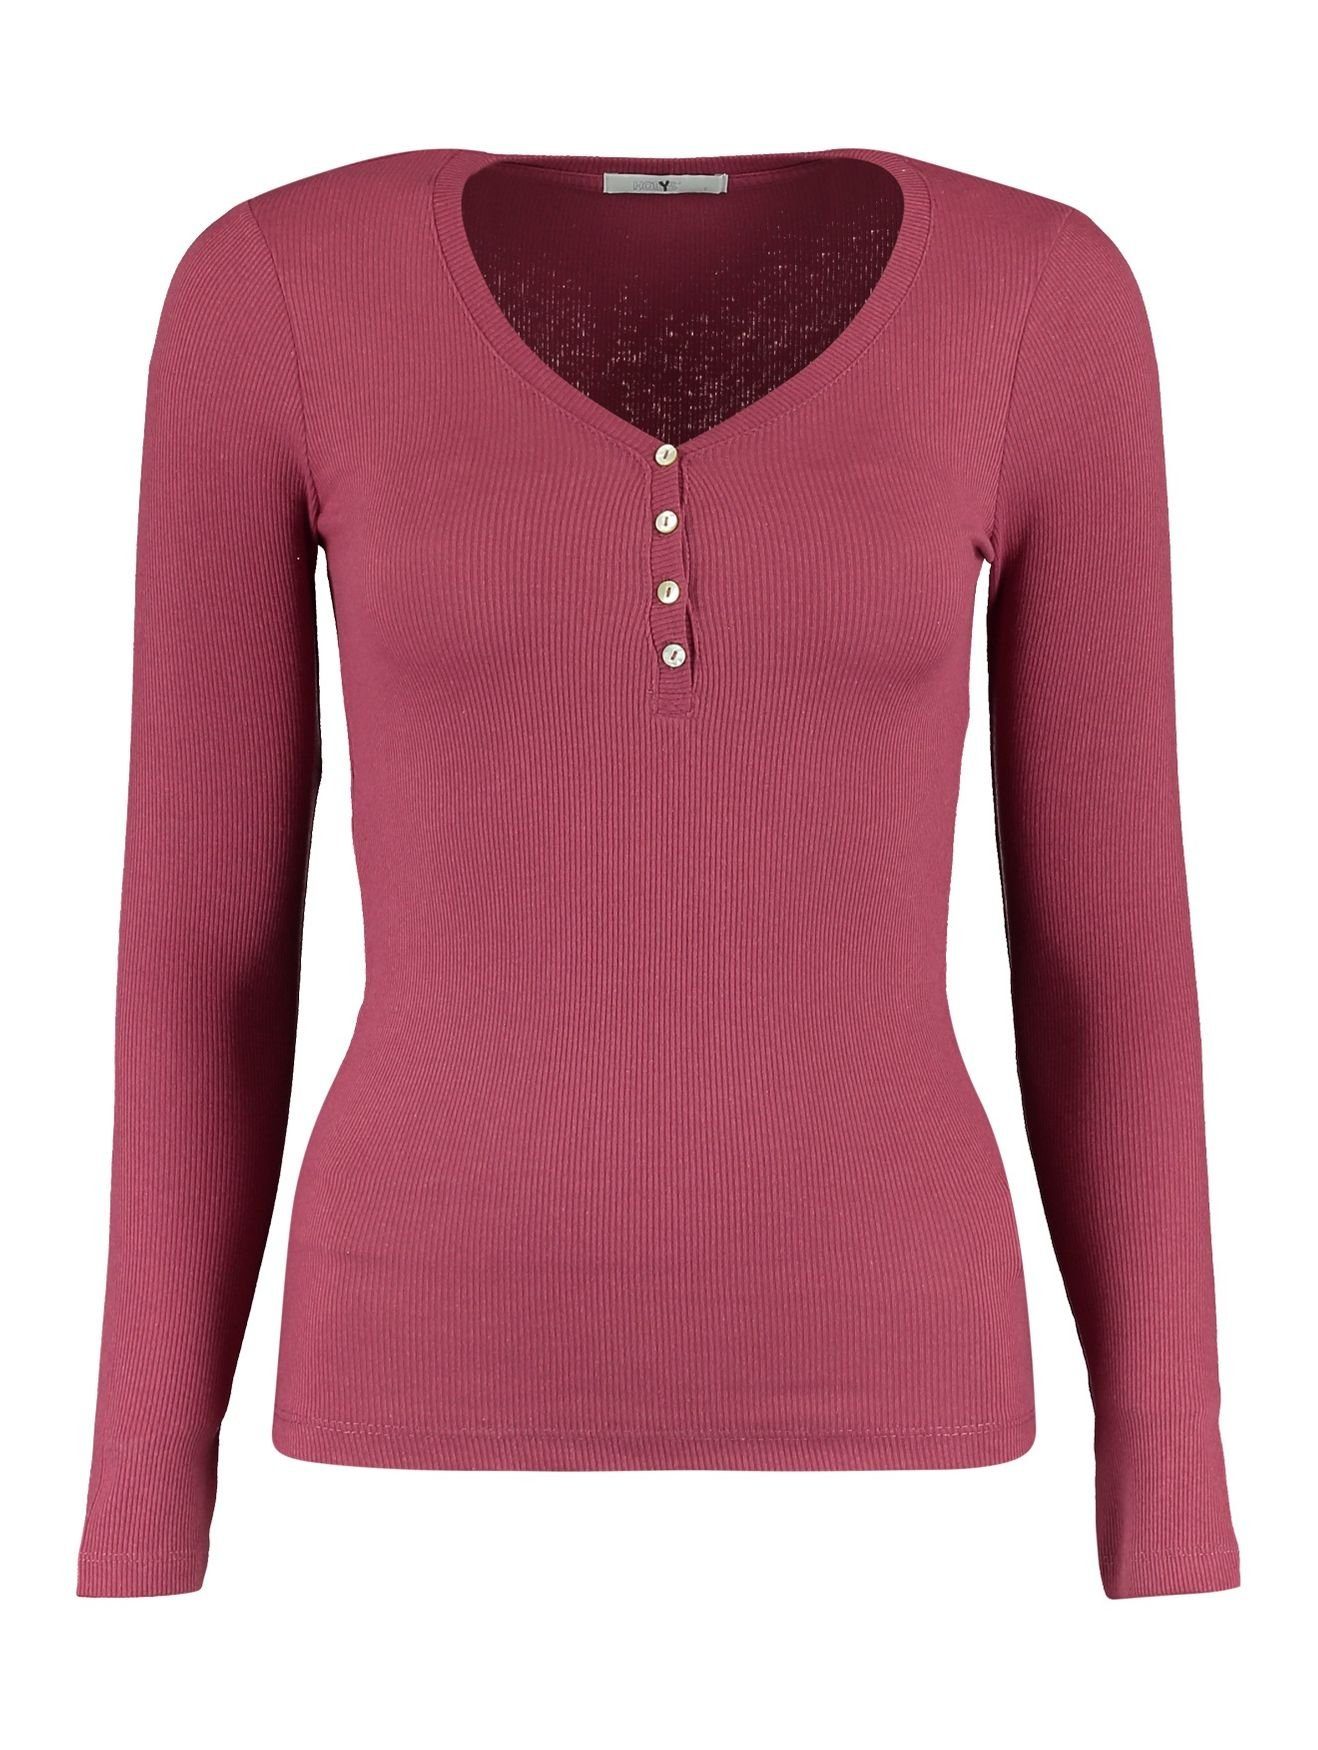 HaILY’S T-Shirt Dünnes Langarm Set Longsleeve Shirt Pink-2 Stretch (2-tlg) 4697 Stück in 2-er KORA